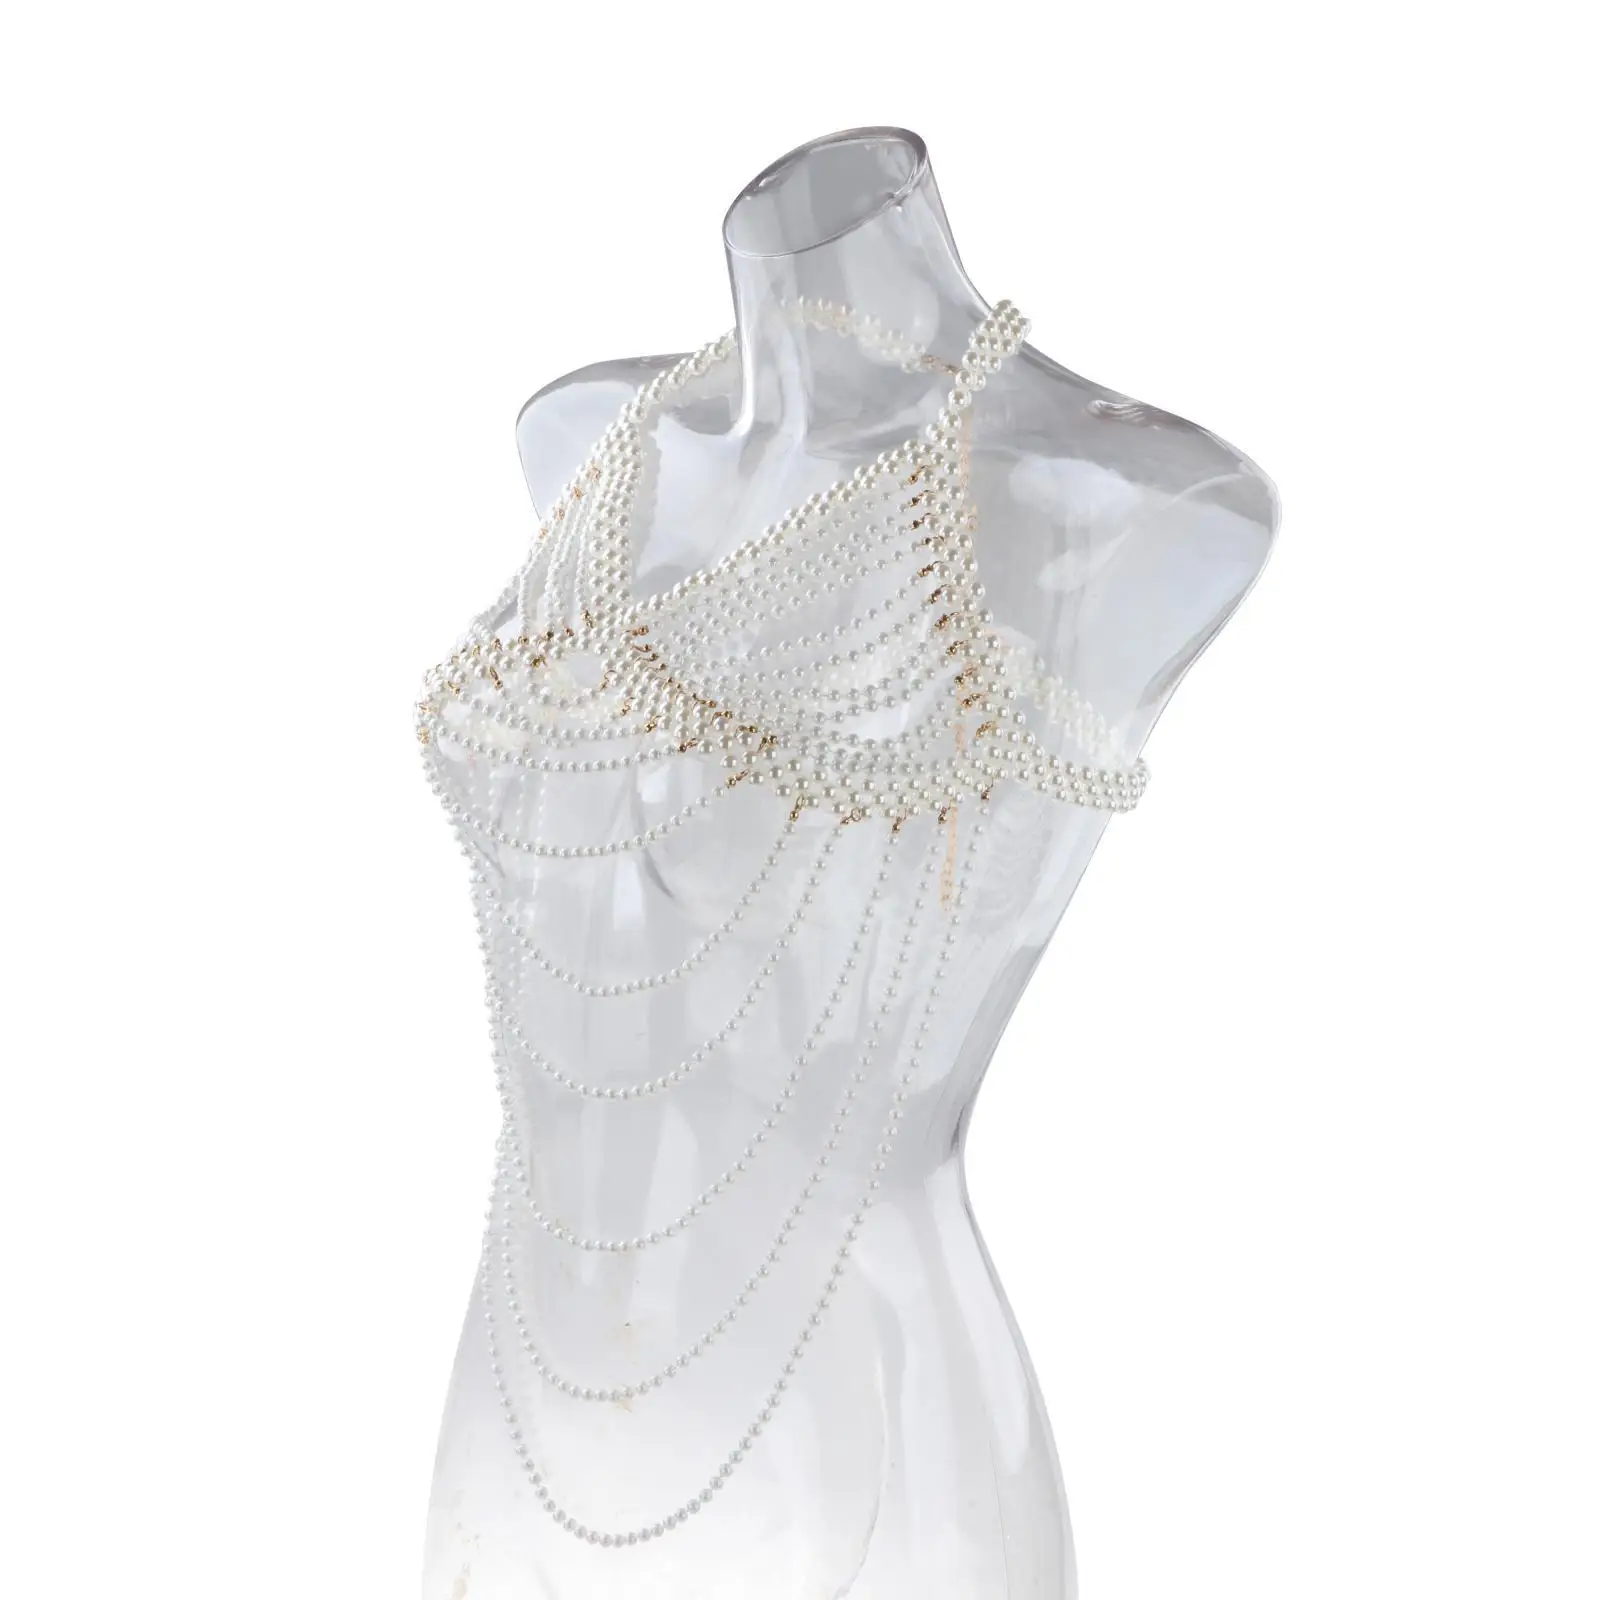 Imitation Pearl Body Chain Classic Multilayer for Costume Party Gift Bikini